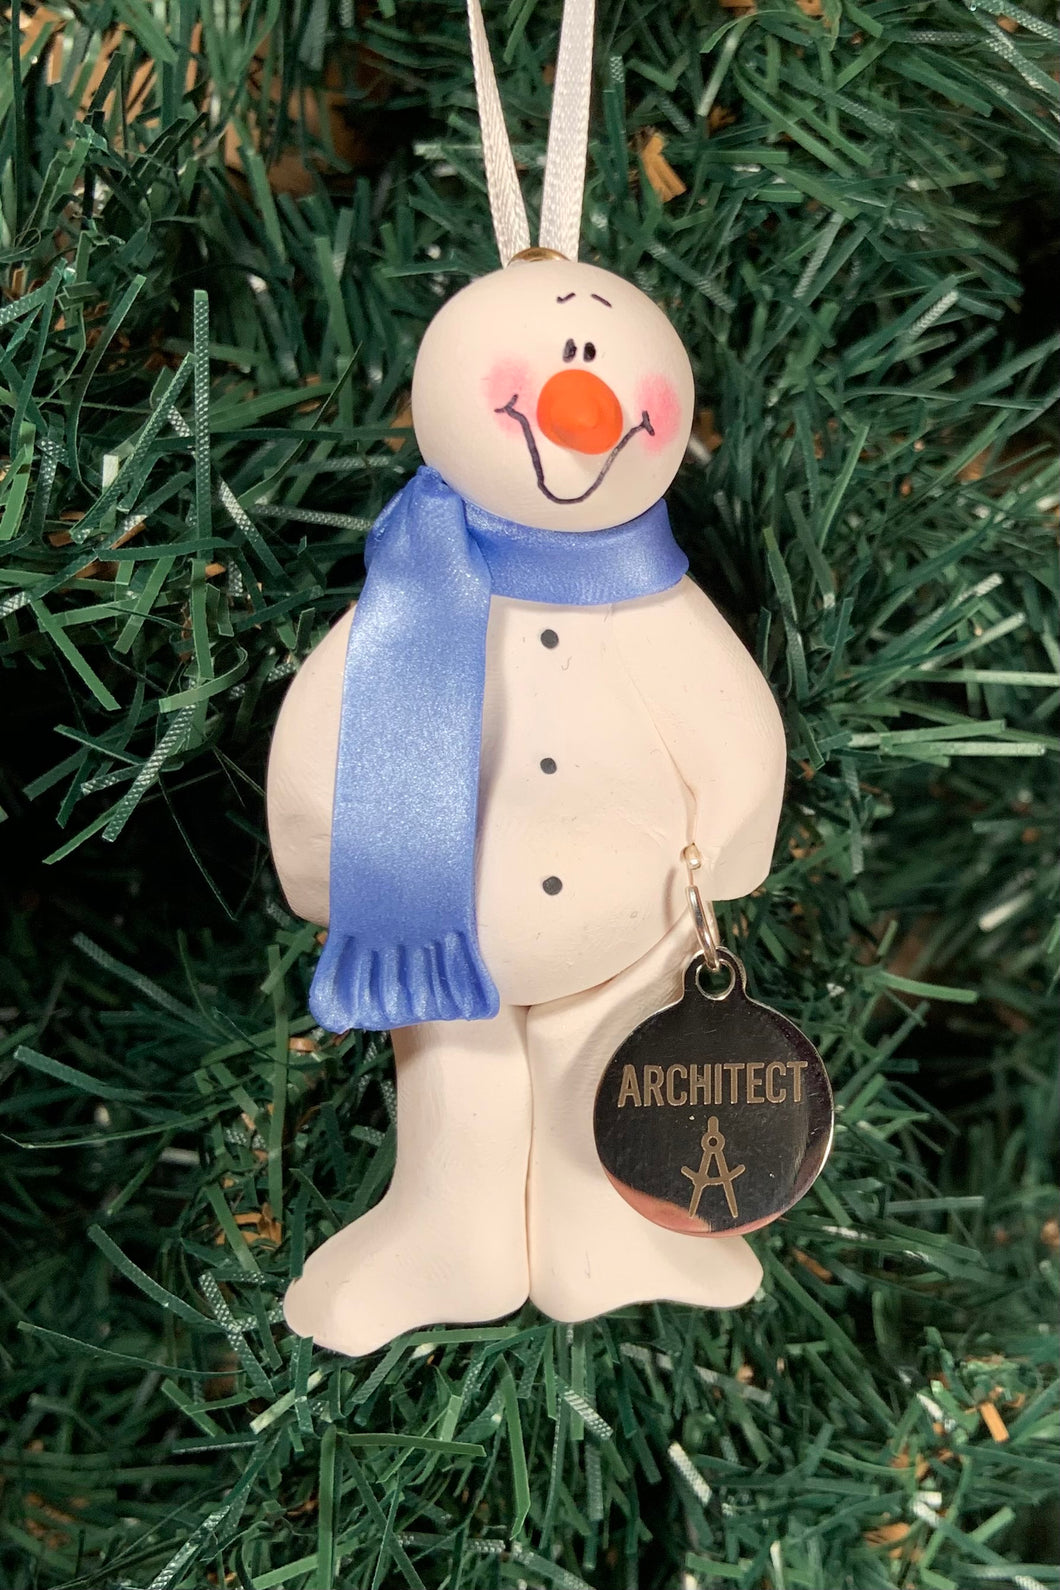 Architect Snowman Tree Ornament